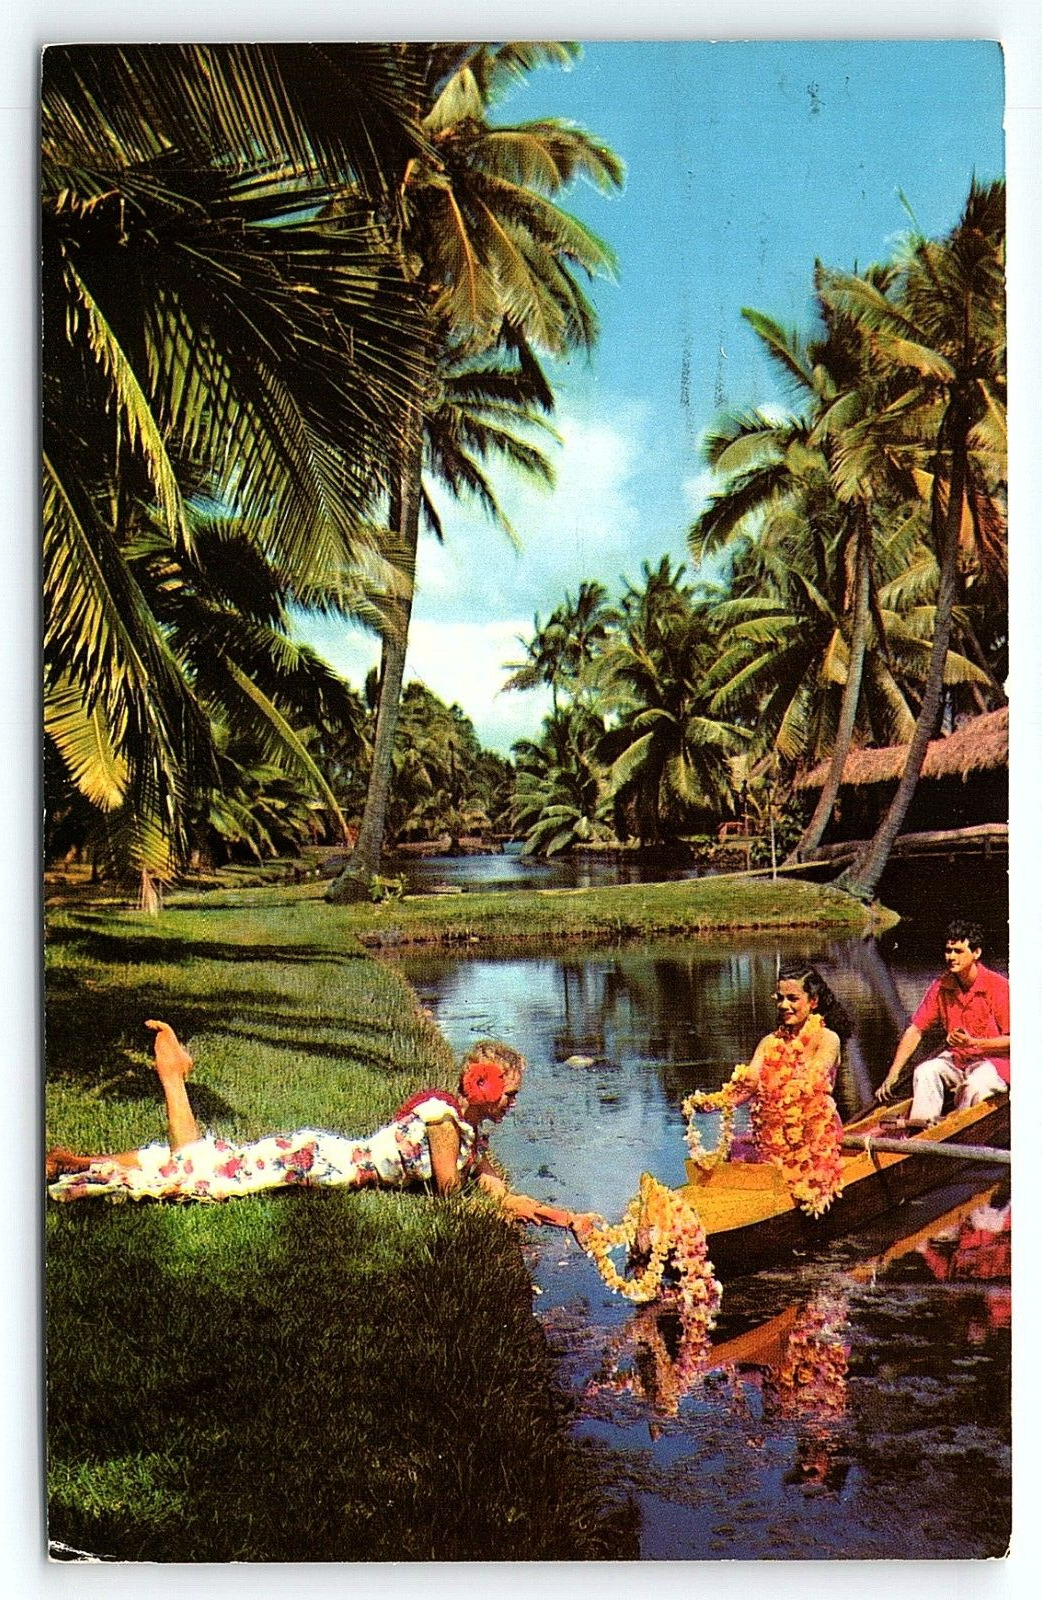 1960s KAUAI ISLAND HAWAII COCO PALMS RESORT HOTEL TROPICAL LAGOON POSTCARD P2389